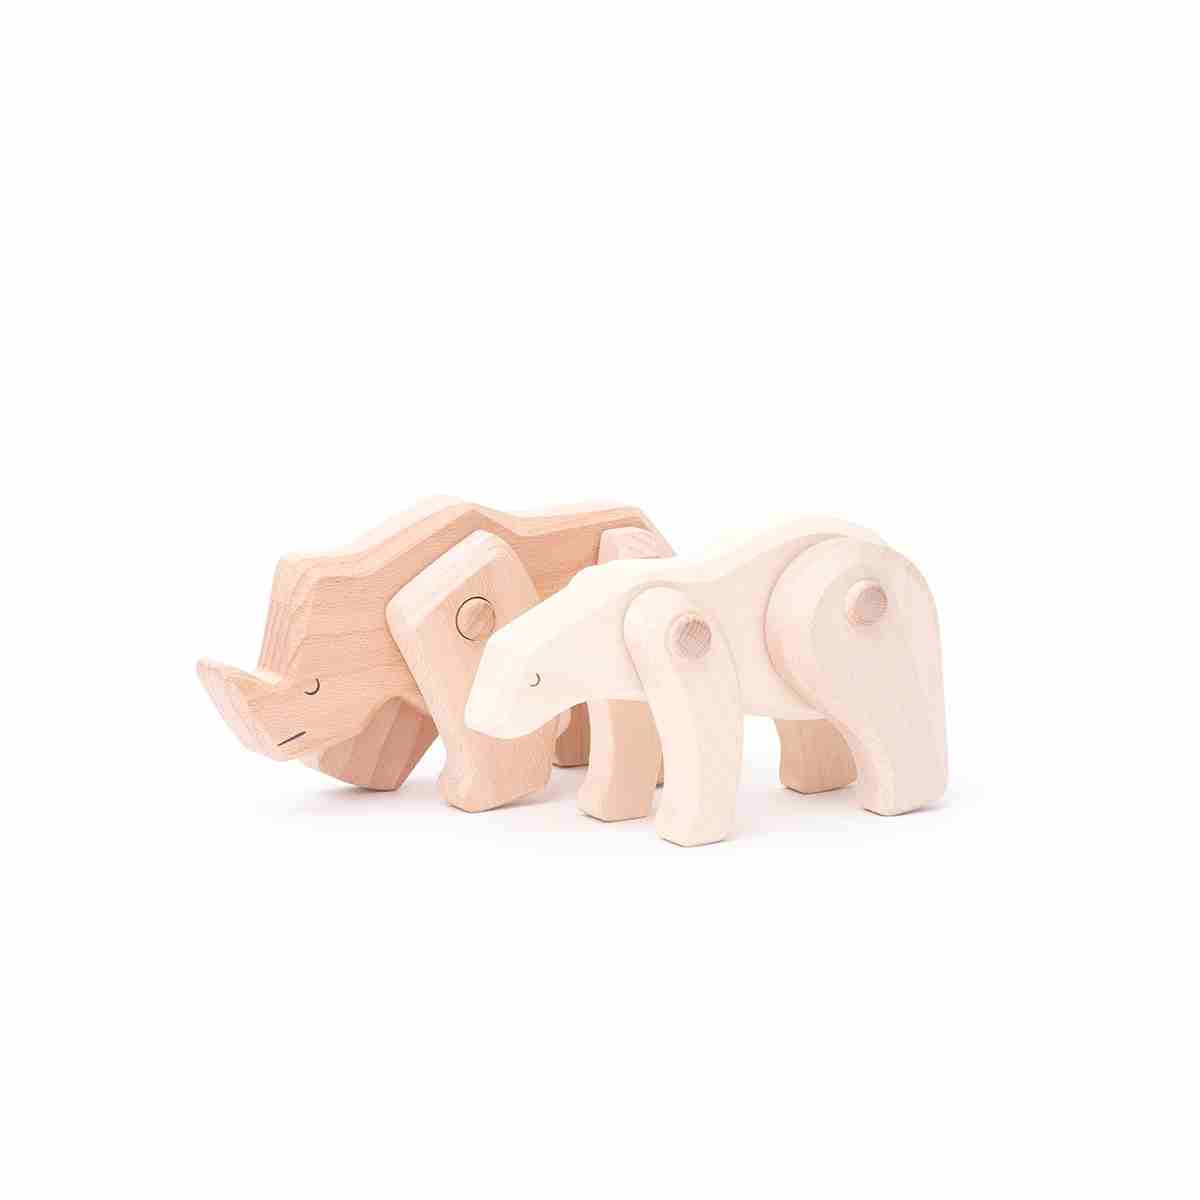 Vache Figurines animal, jouet en bois ostheimer